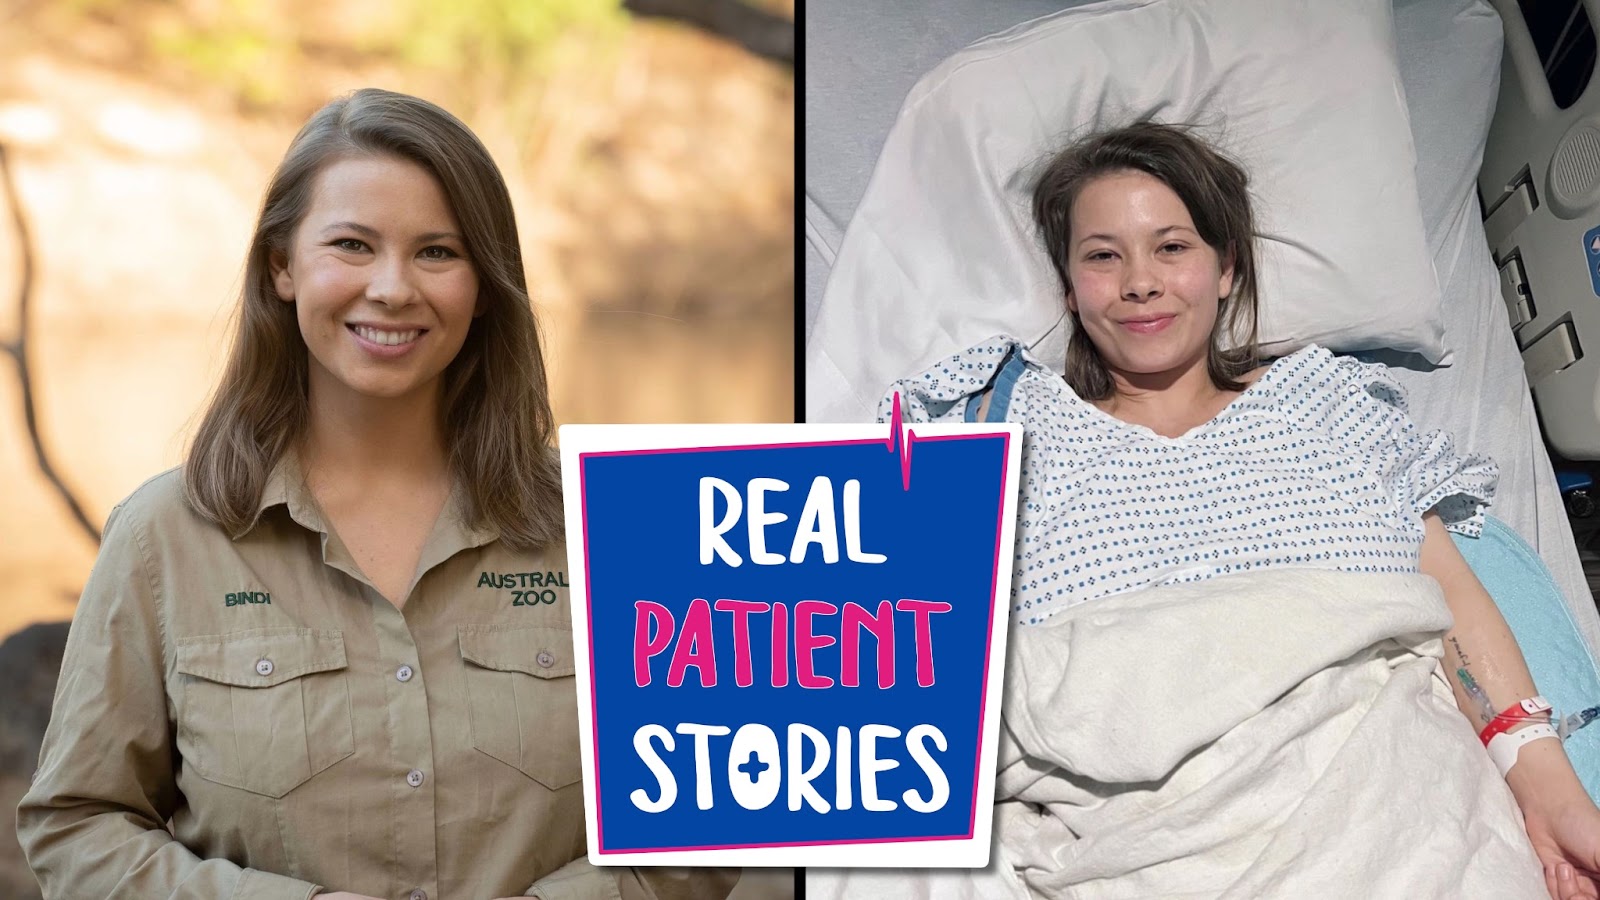 Real patient stories